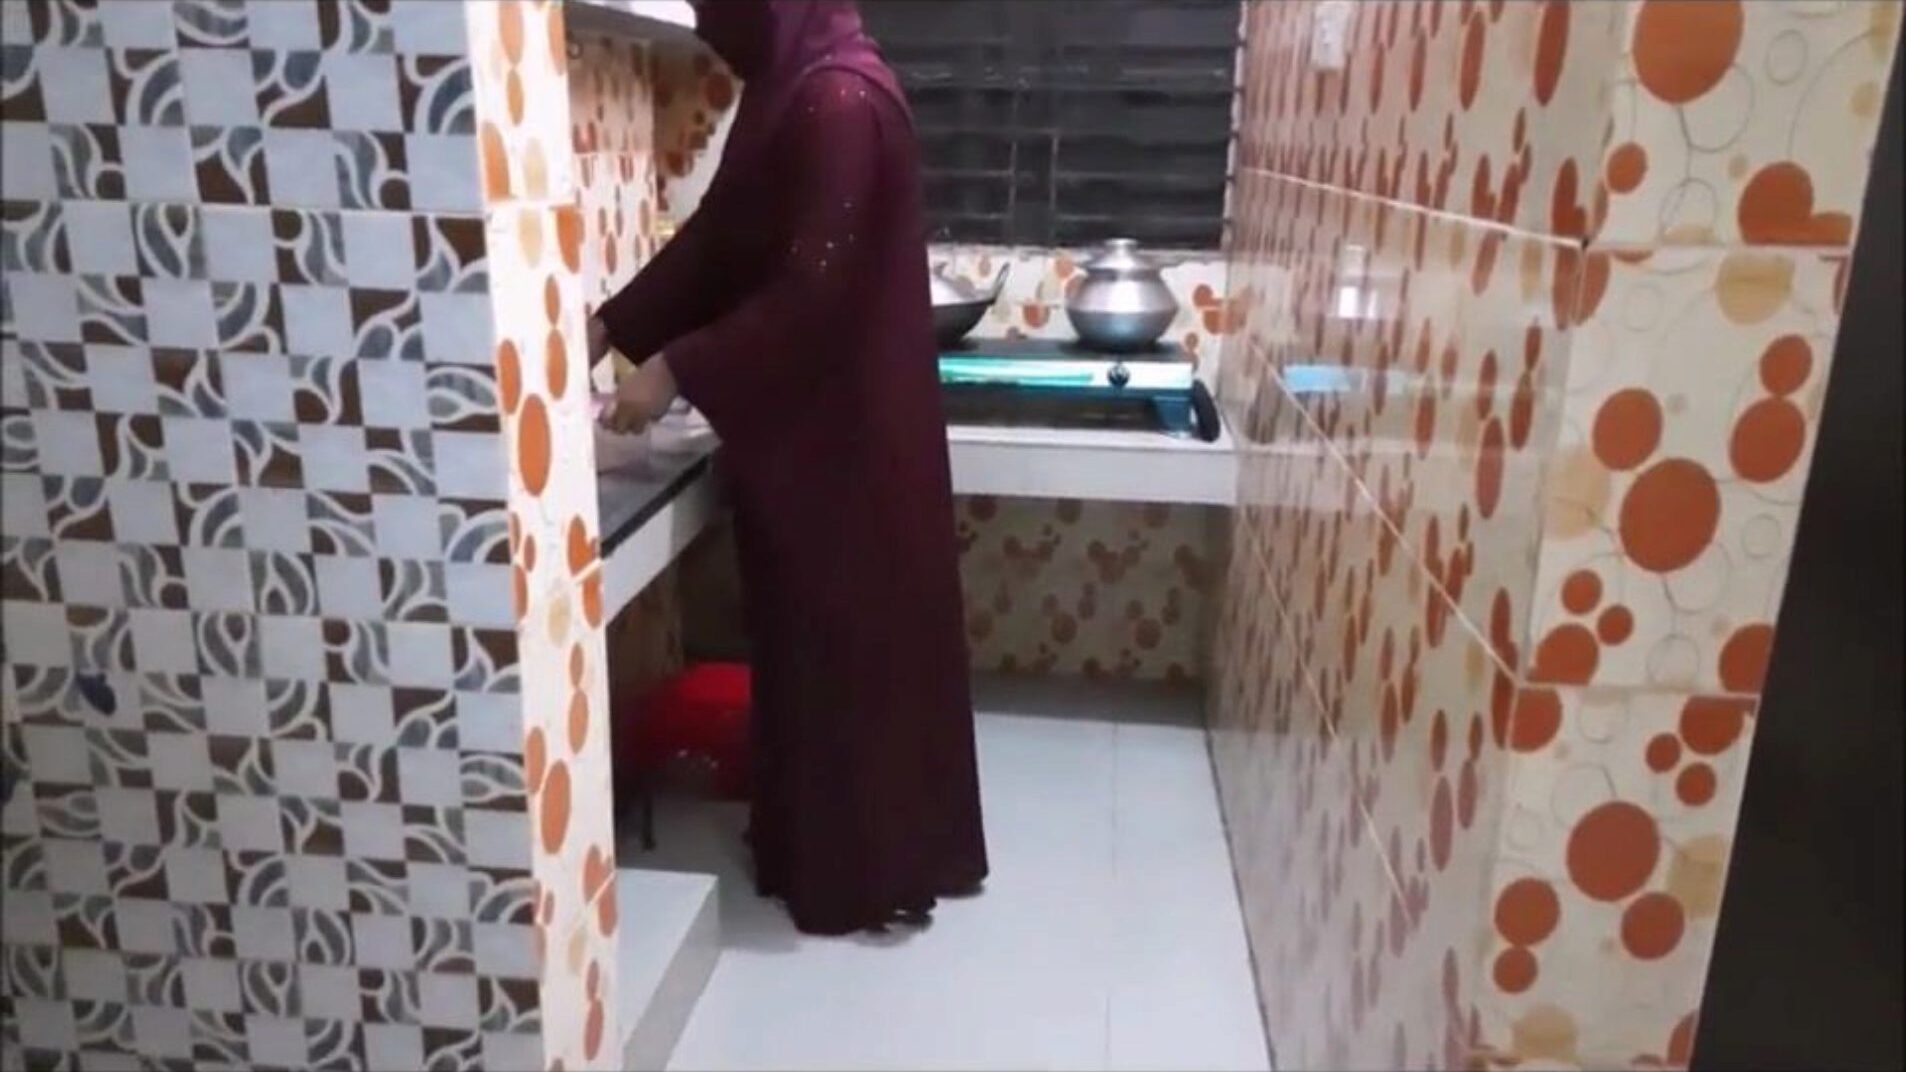 muslim abla mutfakta sikiş kayınbiraderi ile muslim kayınbiraderi mutfakta sikiş izle, kayınbiraderi ile sikiş p-1 filmi xhamster - the ultimate selection of free arab indian hd pornography tube episodes